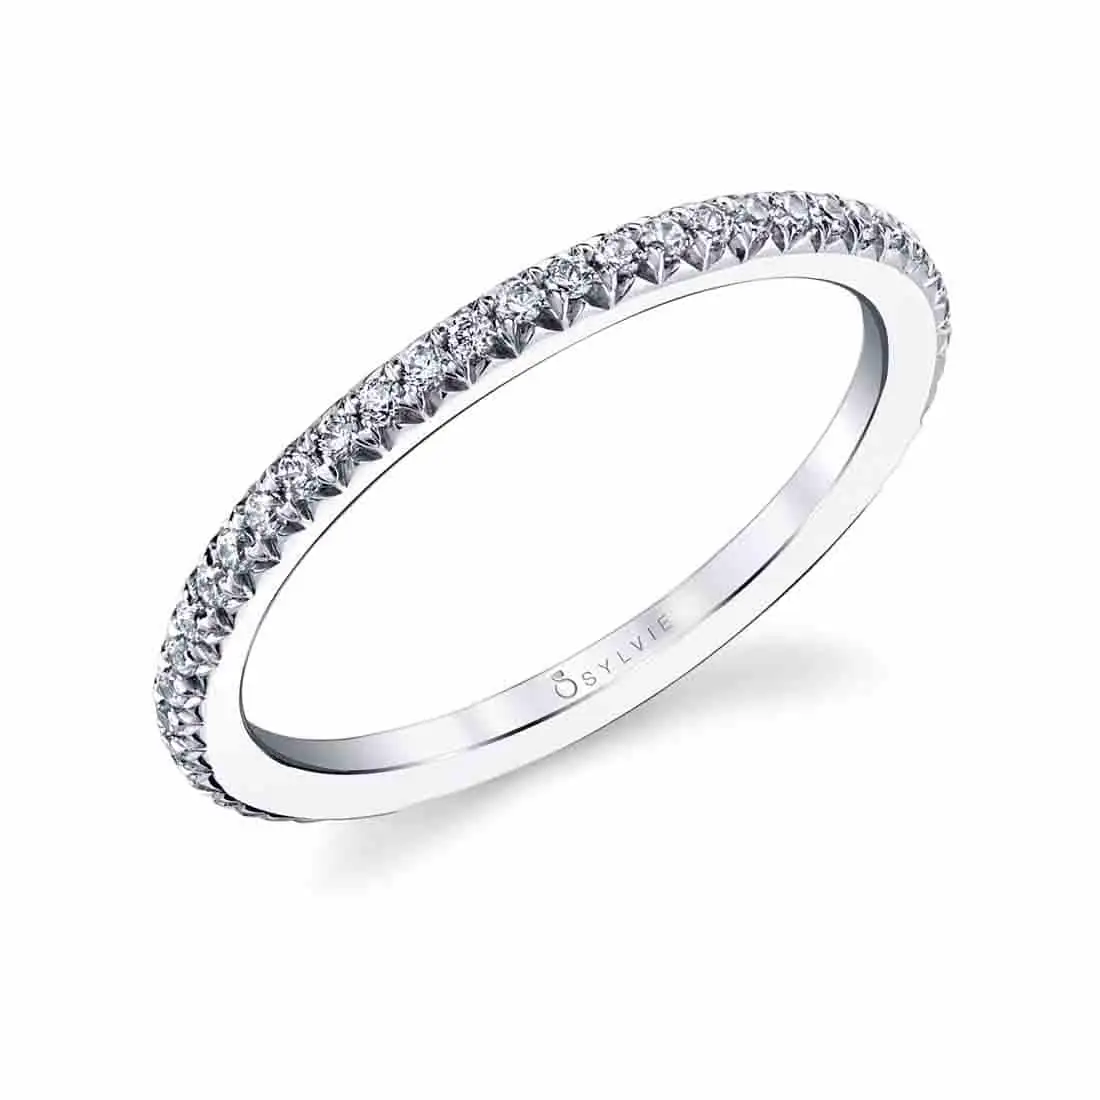 Profile Image of a Princess Cut Halo Engagement Ring